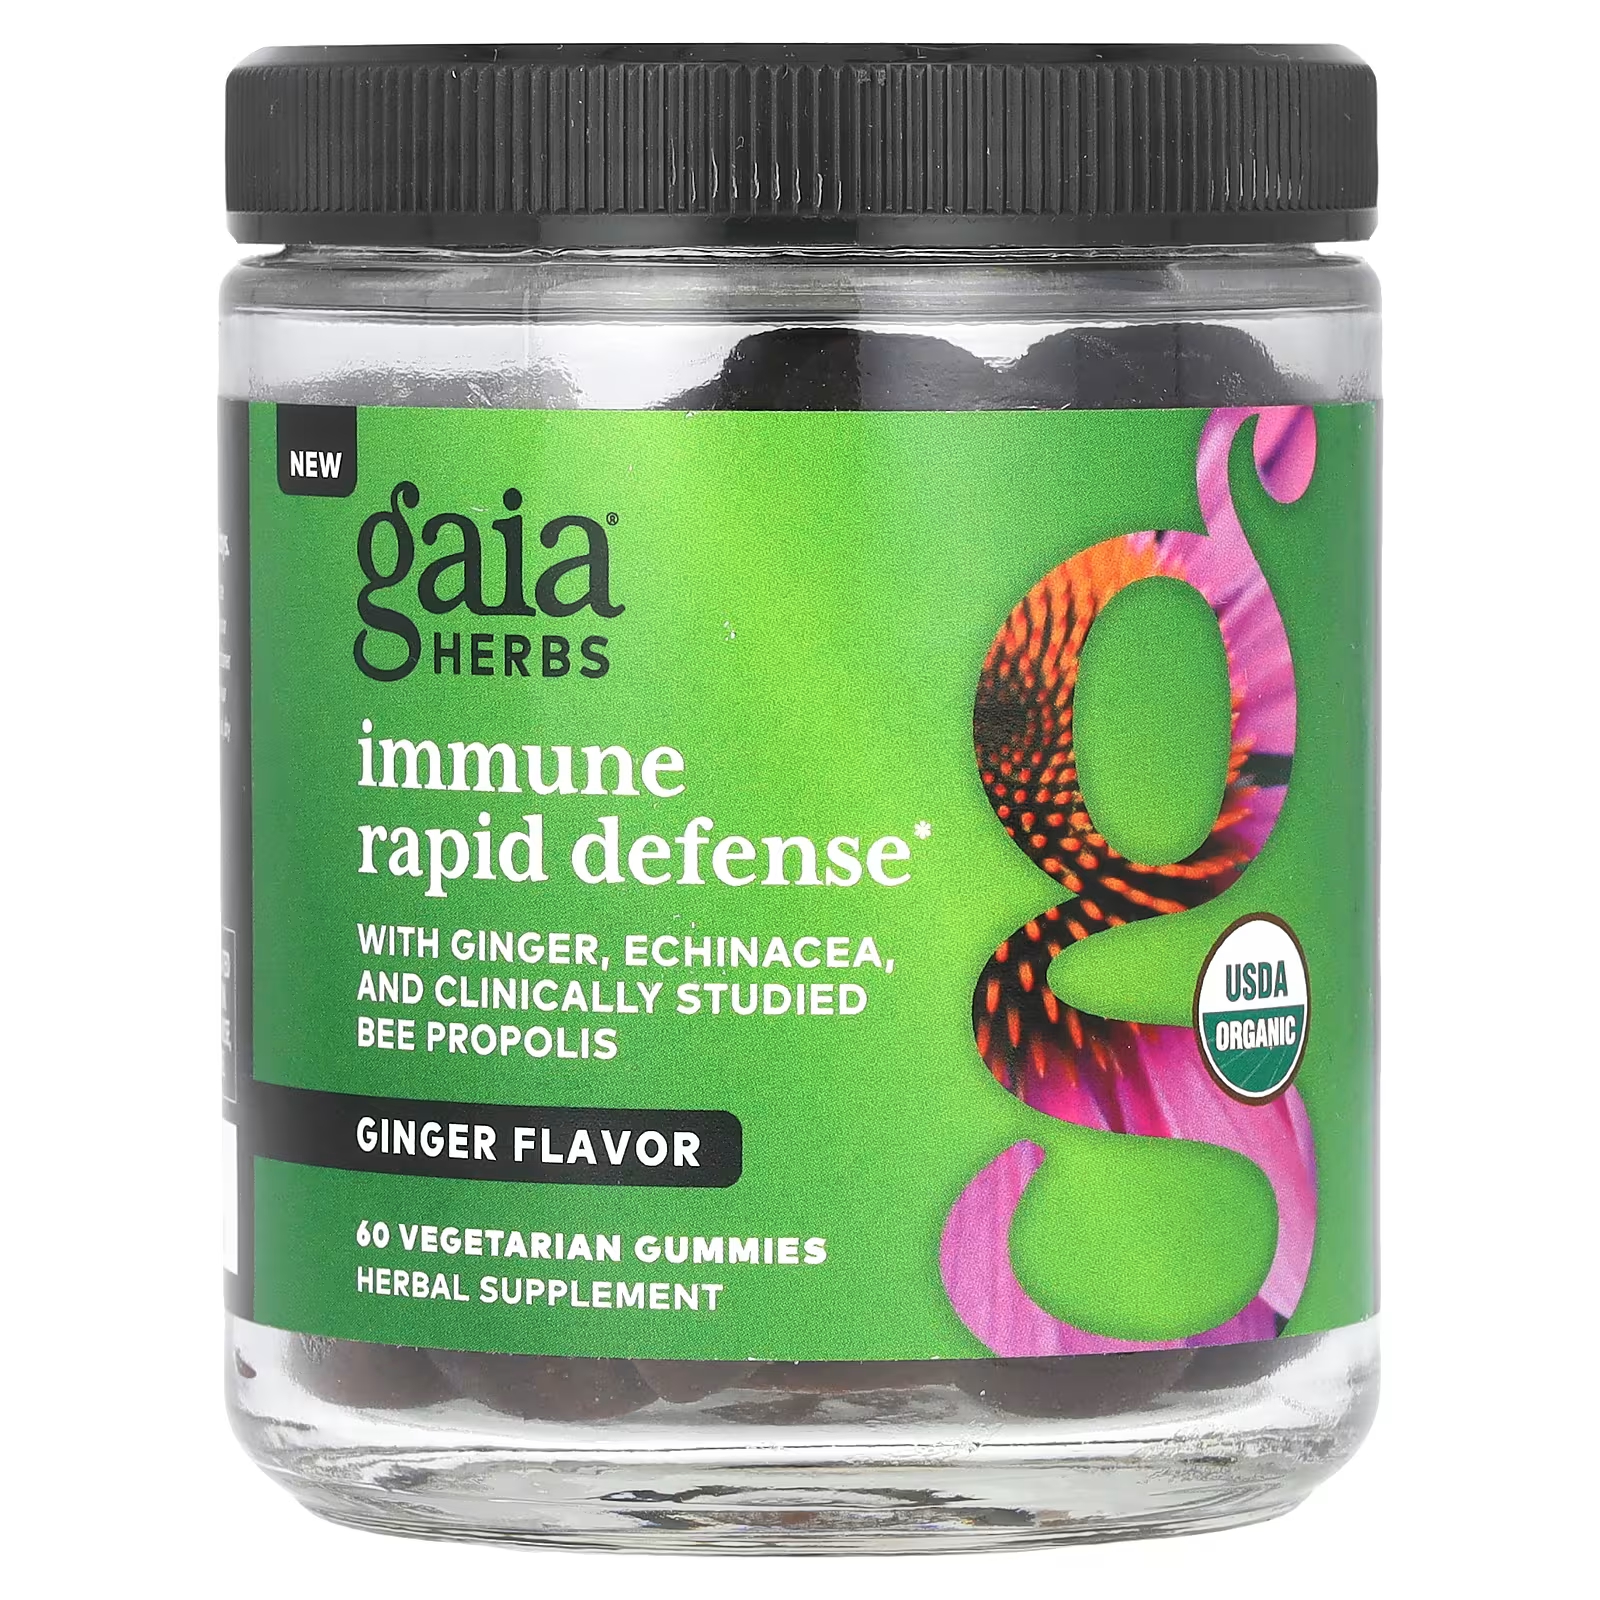 swanson rapid immune defense 30 капсул Растительная добавка Gaia Herbs Immune Rapid Defense имбирь, 60 жевательных конфет